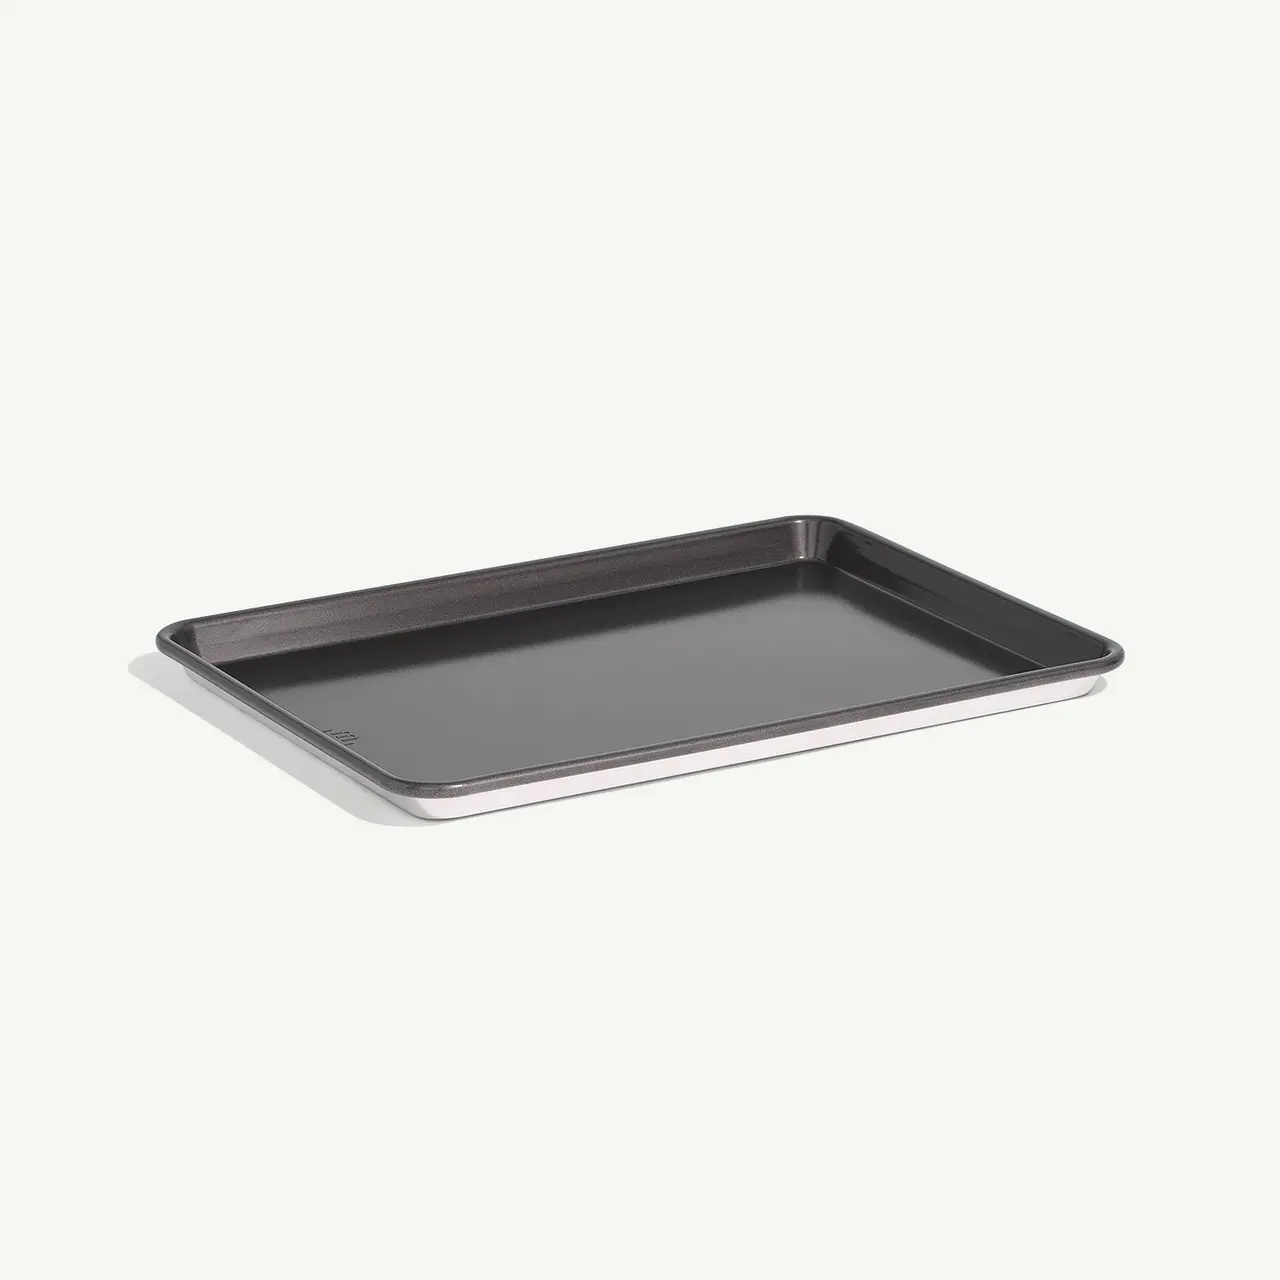 A plain, rectangular, black baking tray on a light background.